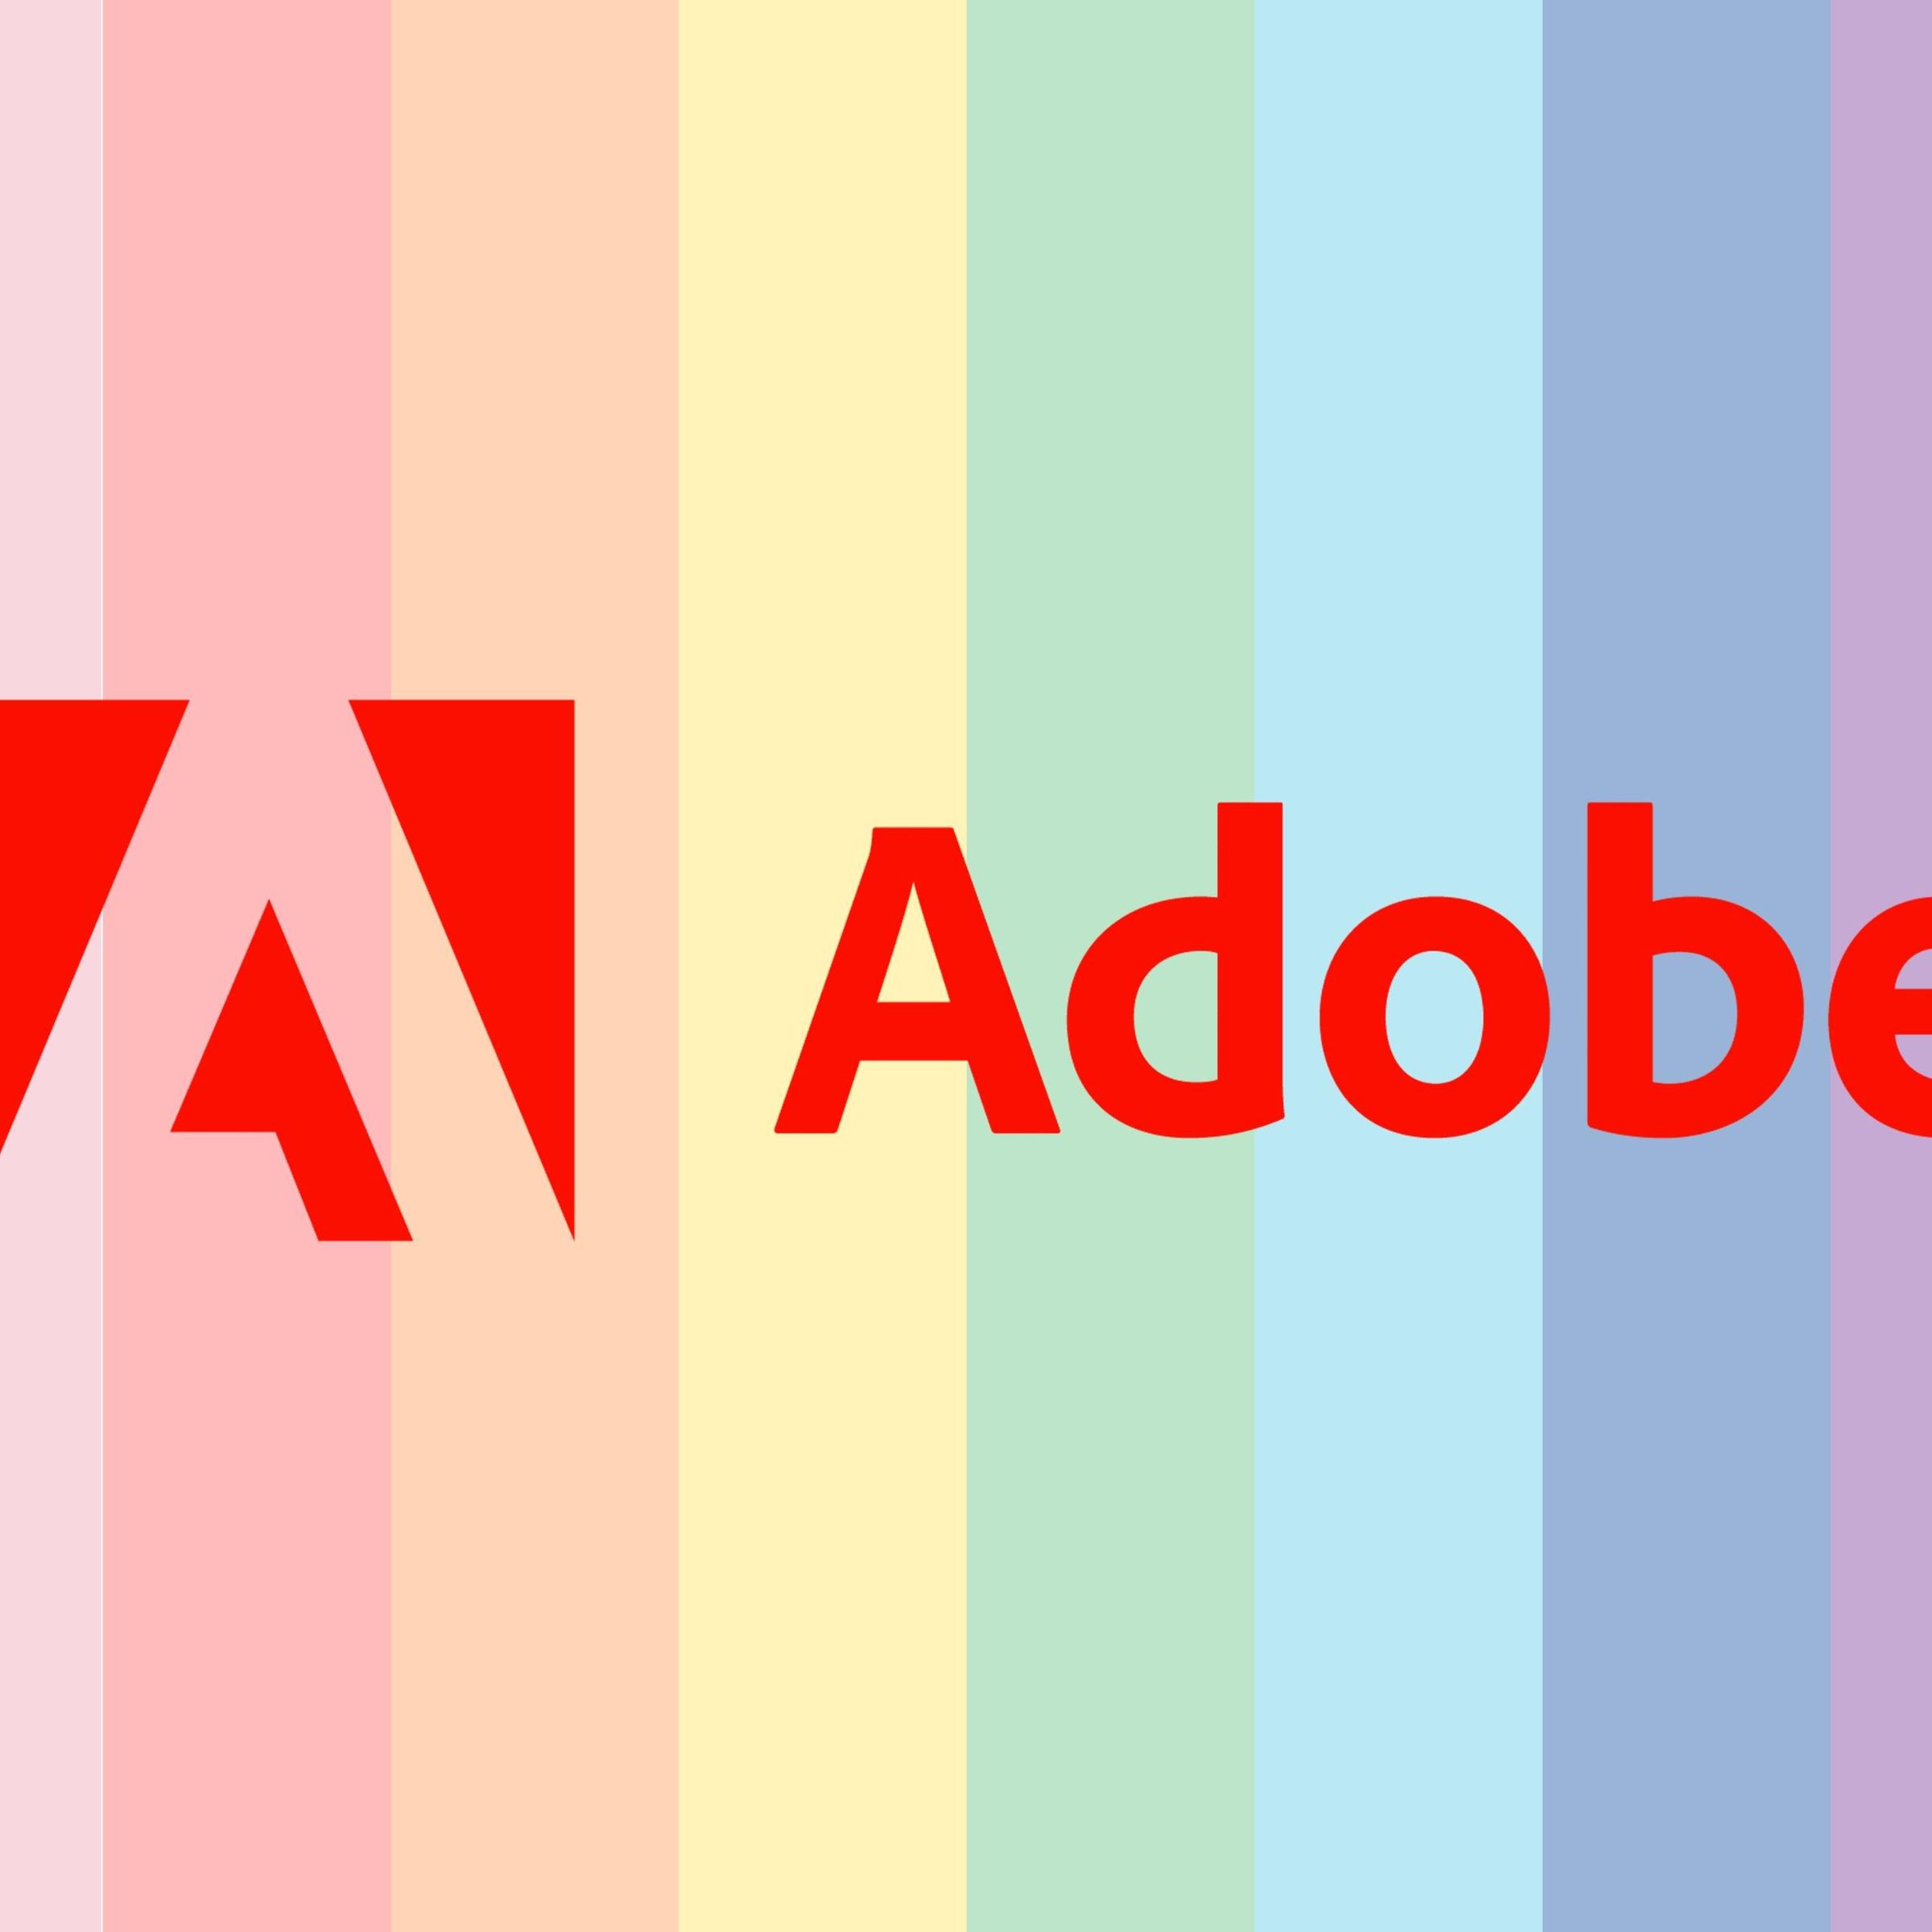 The Adobe logo against a pastel rainbow backdrop